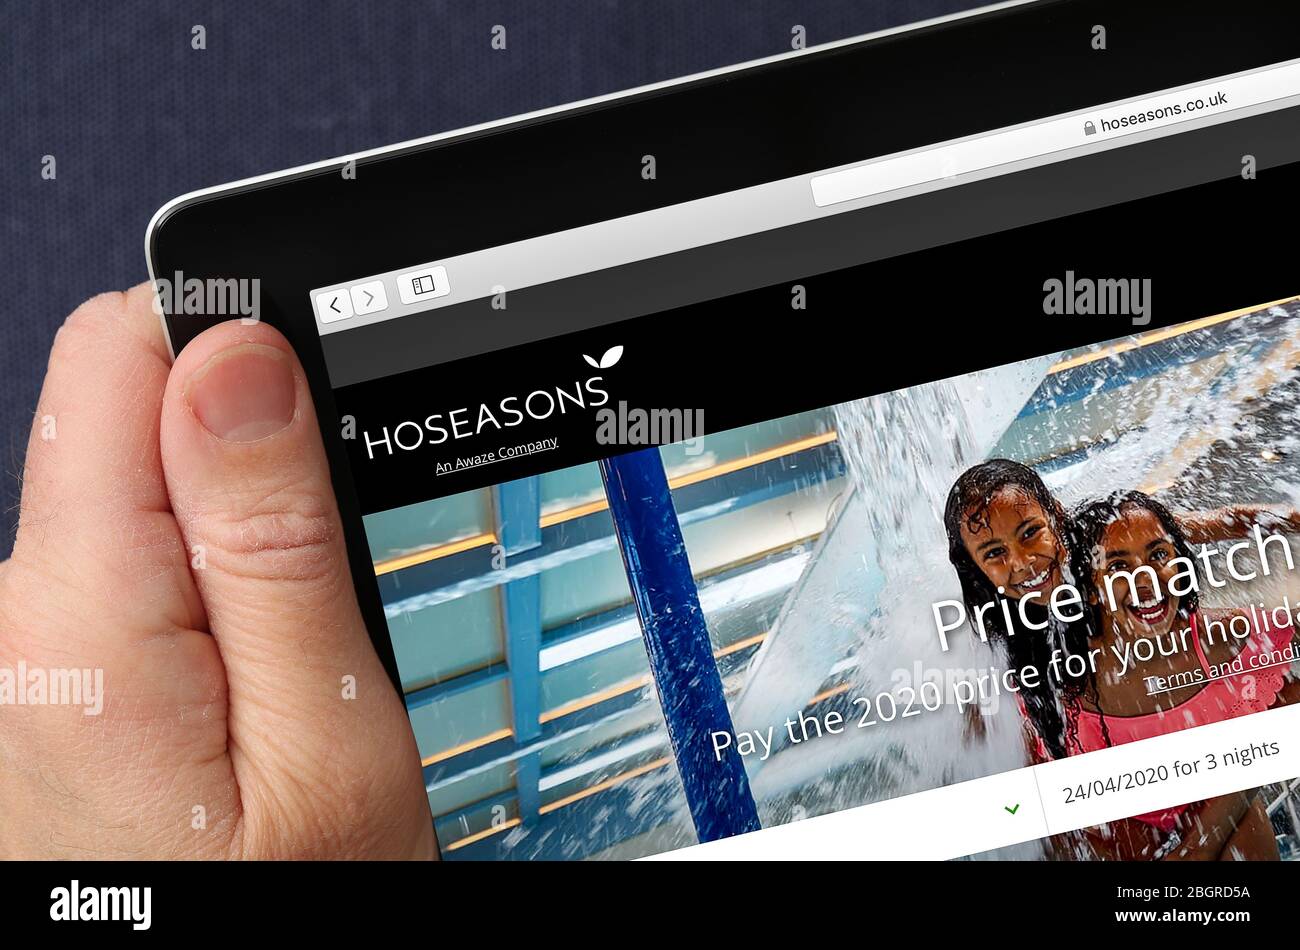 Hoseasons holidays website viewed on an iPad Stock Photo